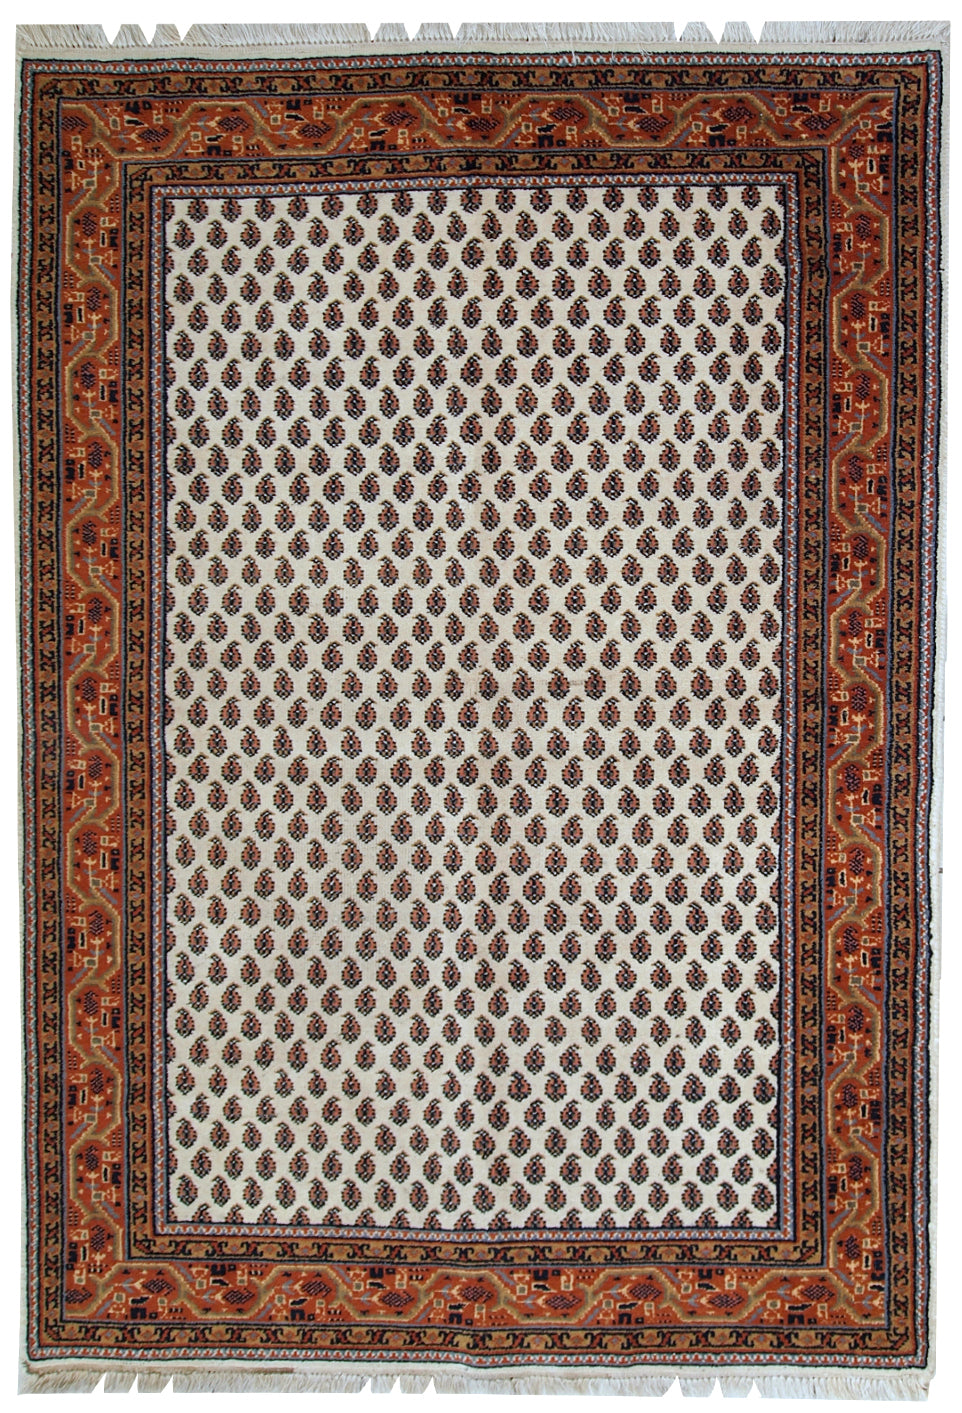 Handmade vintage Indian Seraband style rug, 1980s